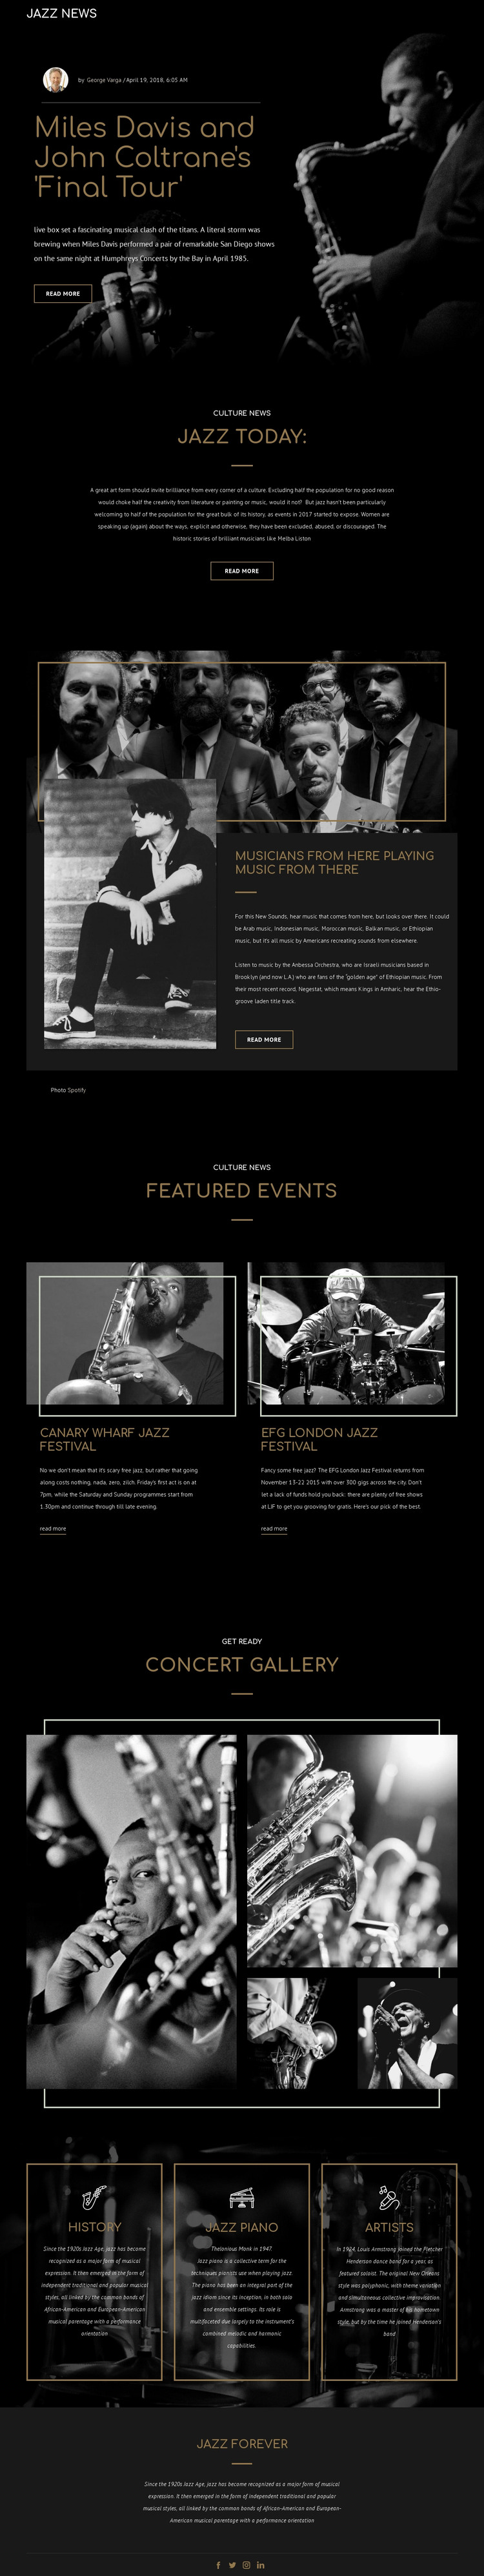 Legengs of jazz music Homepage Design